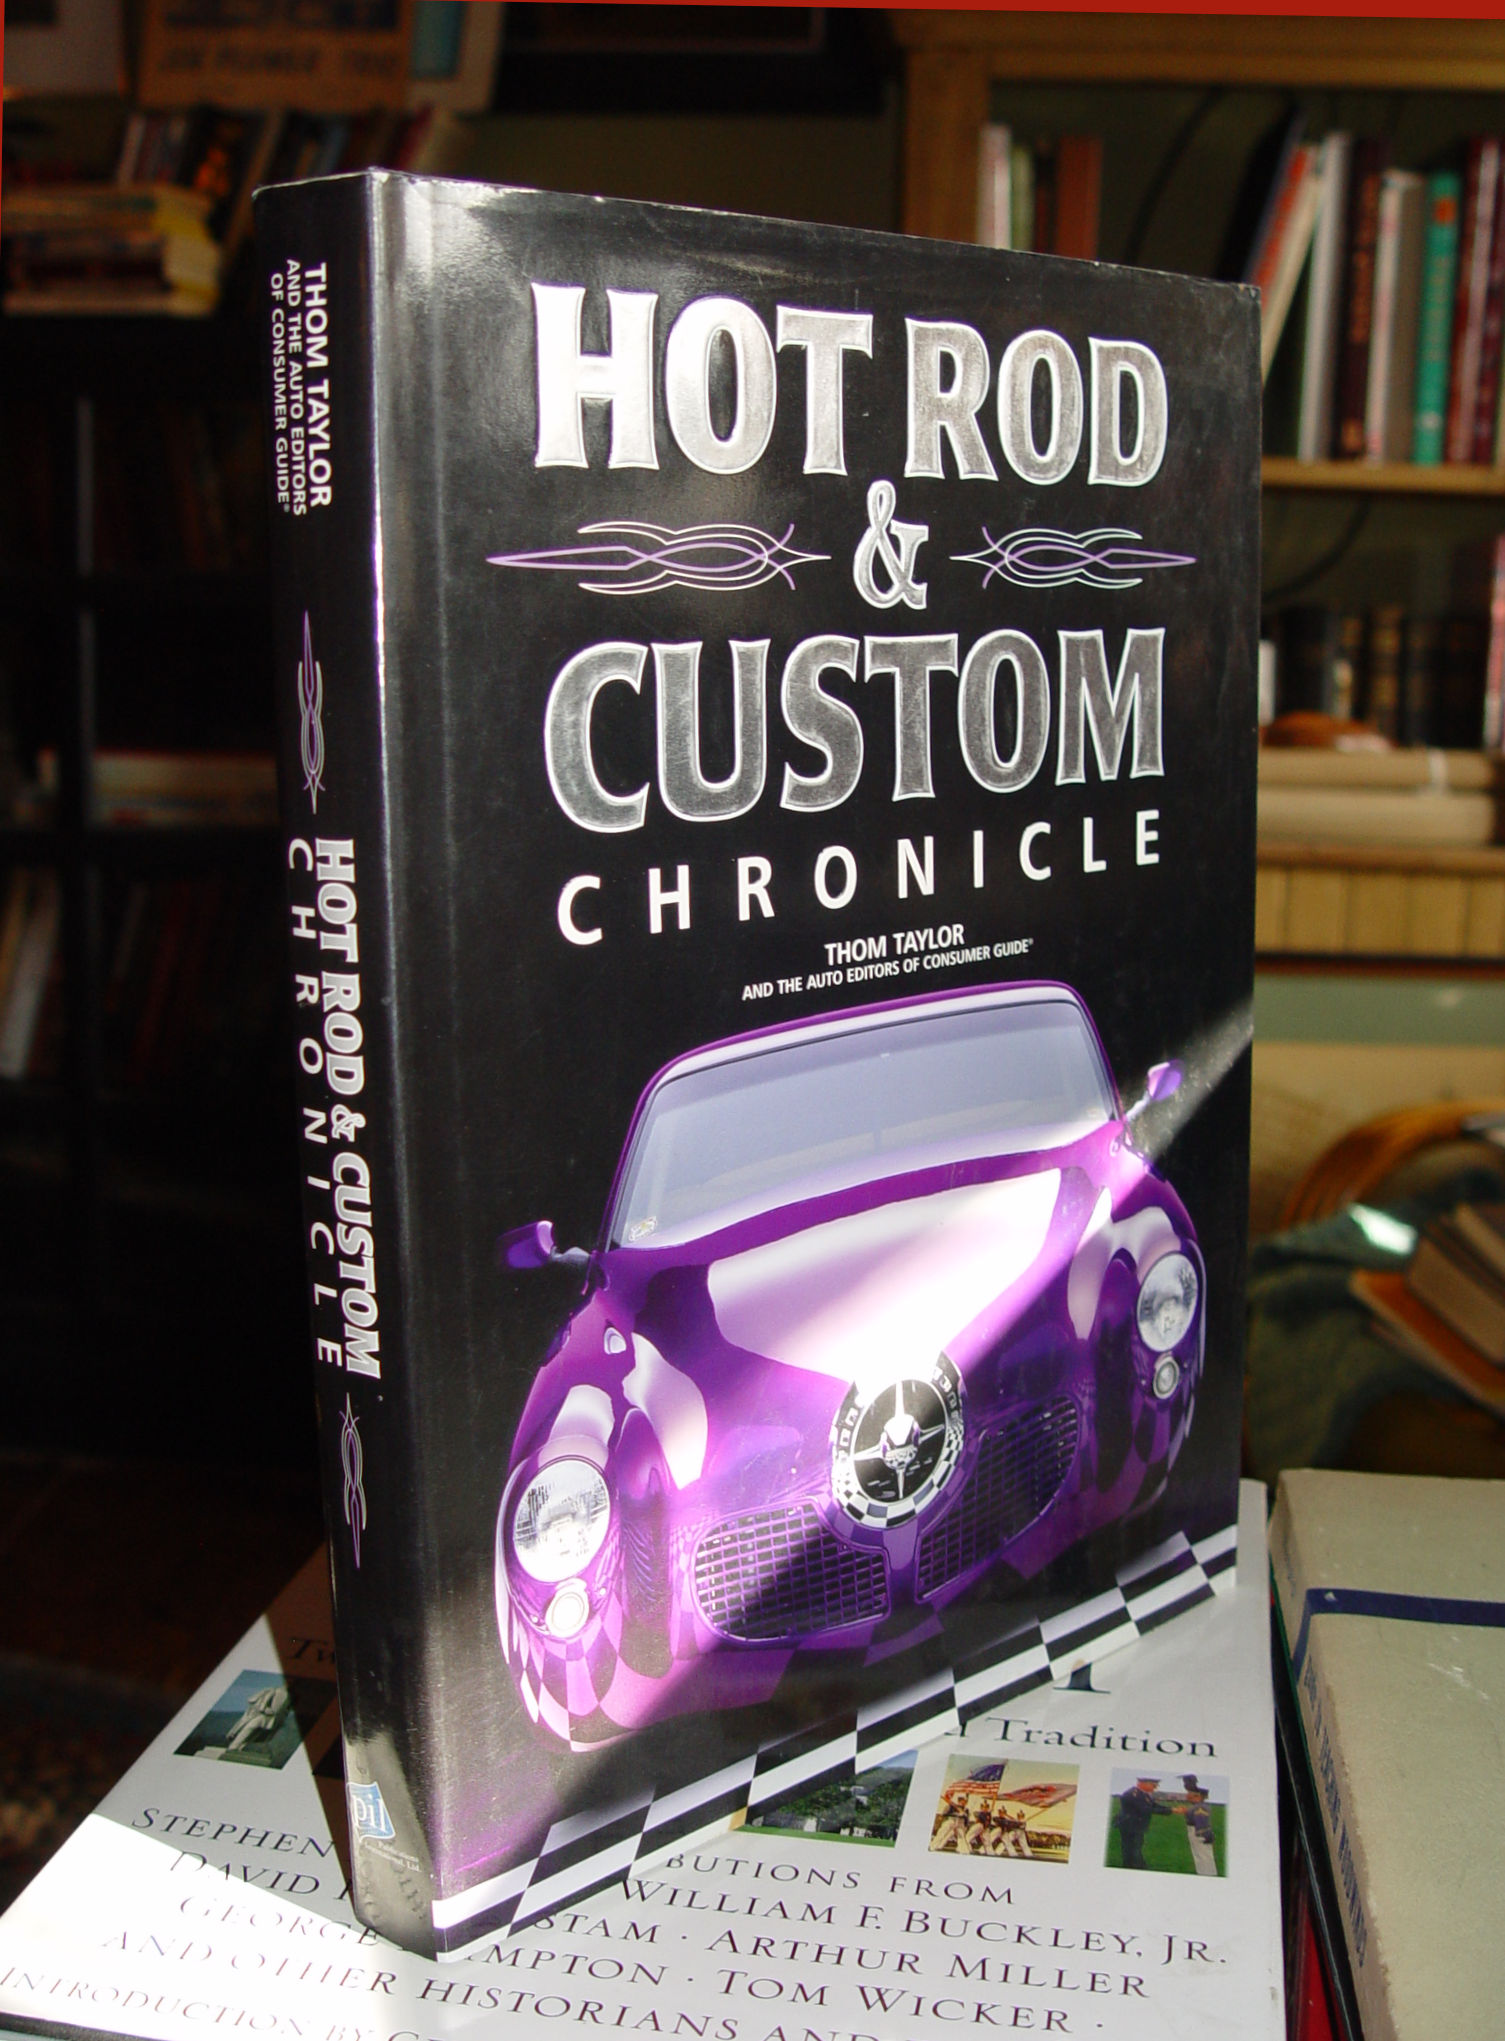 Hot Rod & Custom Chronicle by Thom
                        Taylor 2006 1st Ed.